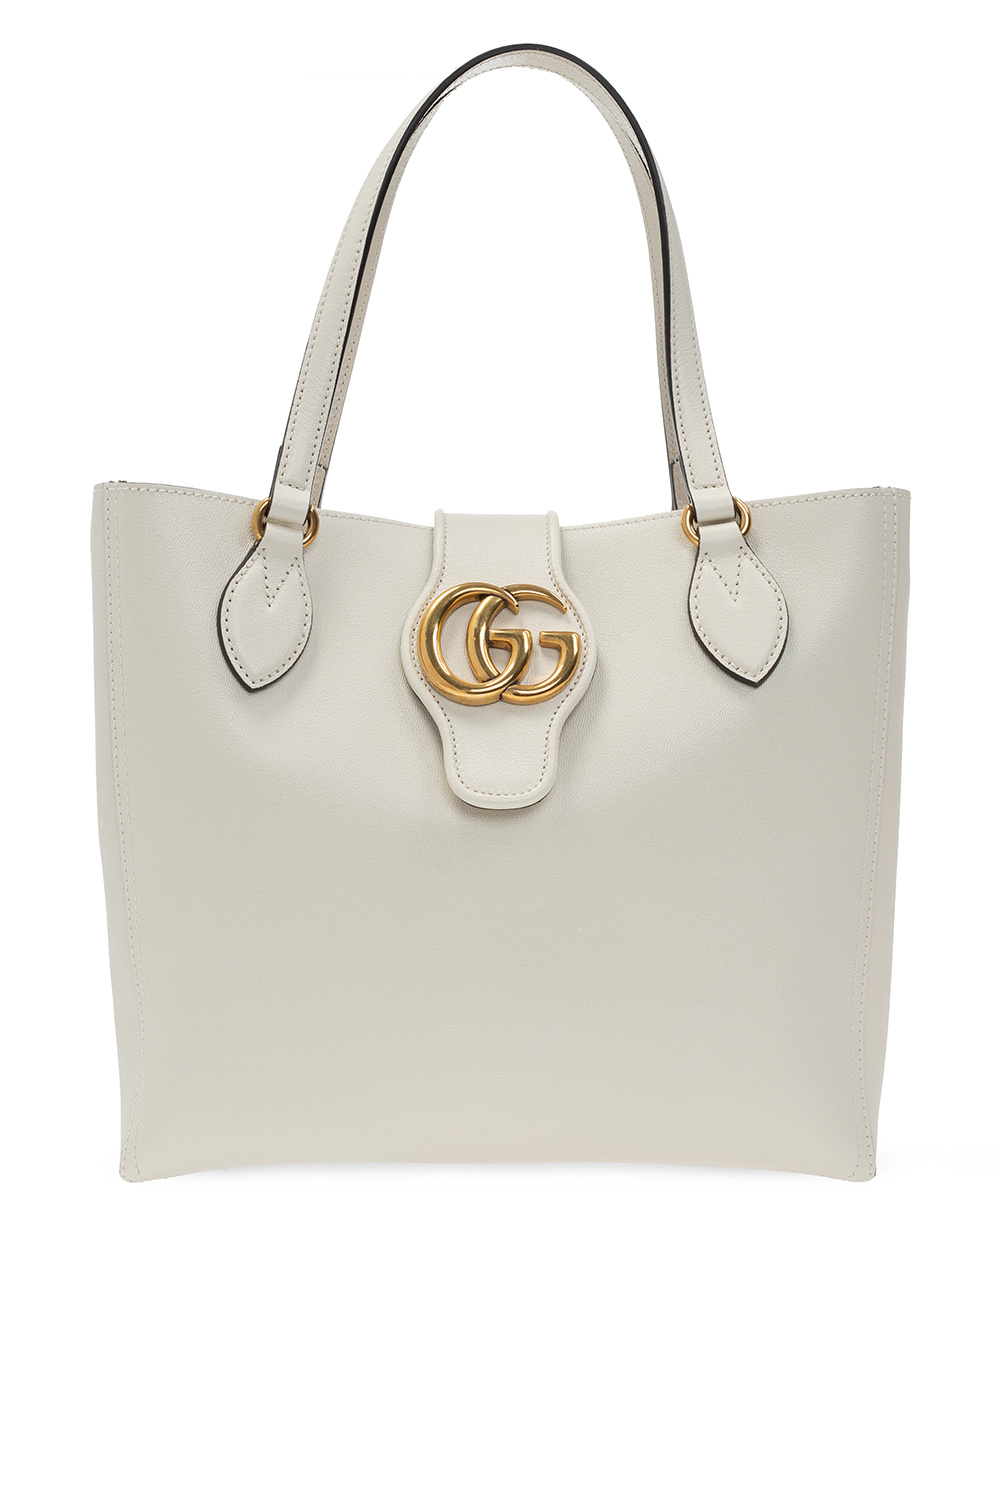 1000% AUTH 🌸 GUCCI 🌸 Limited Edition Sylvie Mini Floral White Shoulder Bag